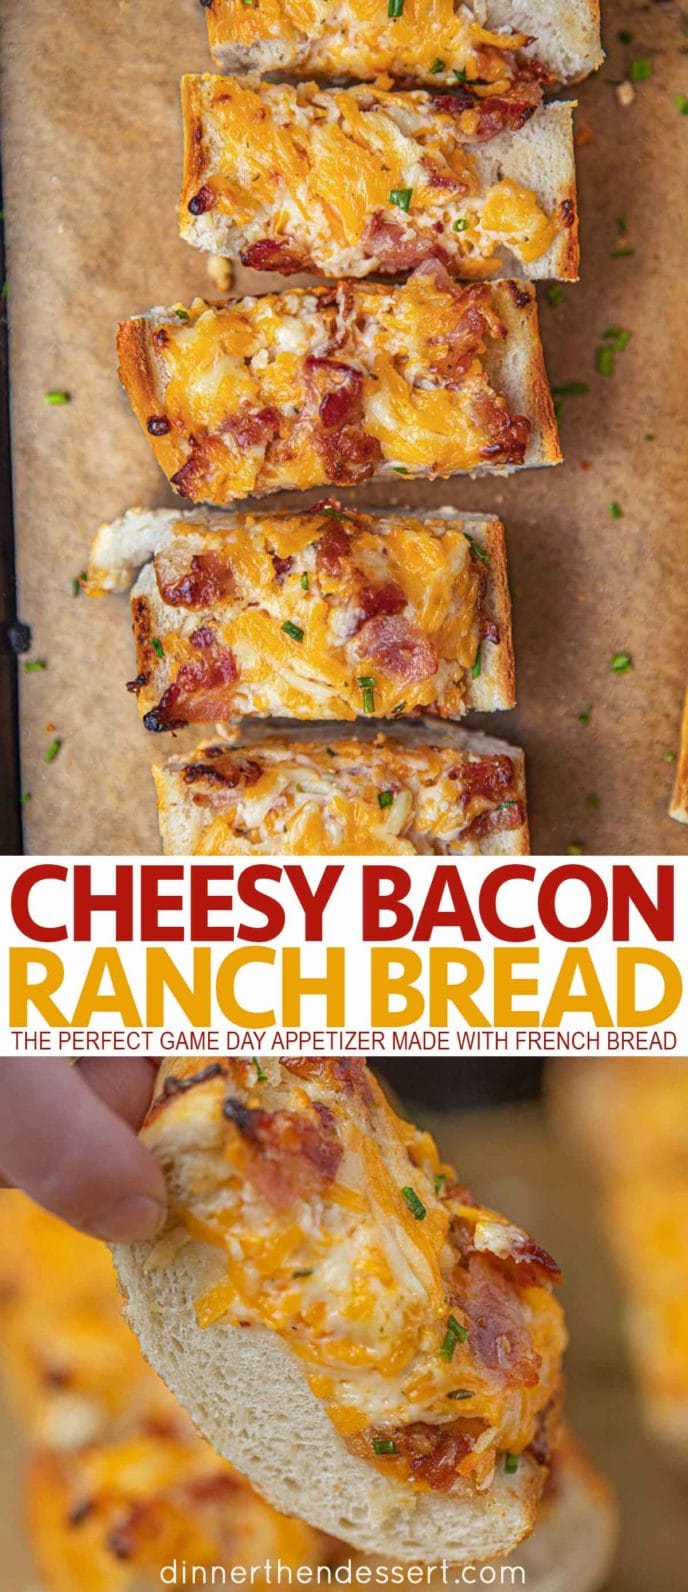 Slices of Cheesy Bacon Ranch Bread